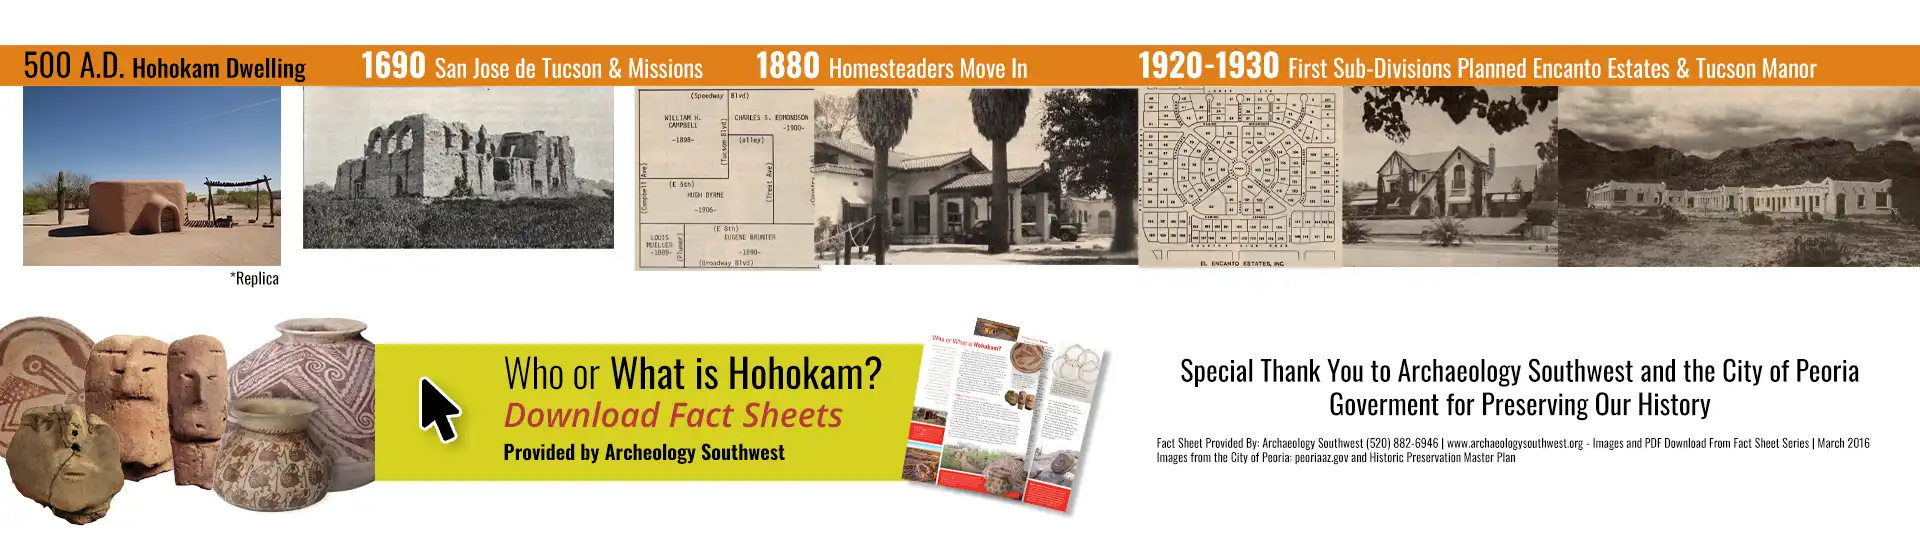 History of Tucson Housing